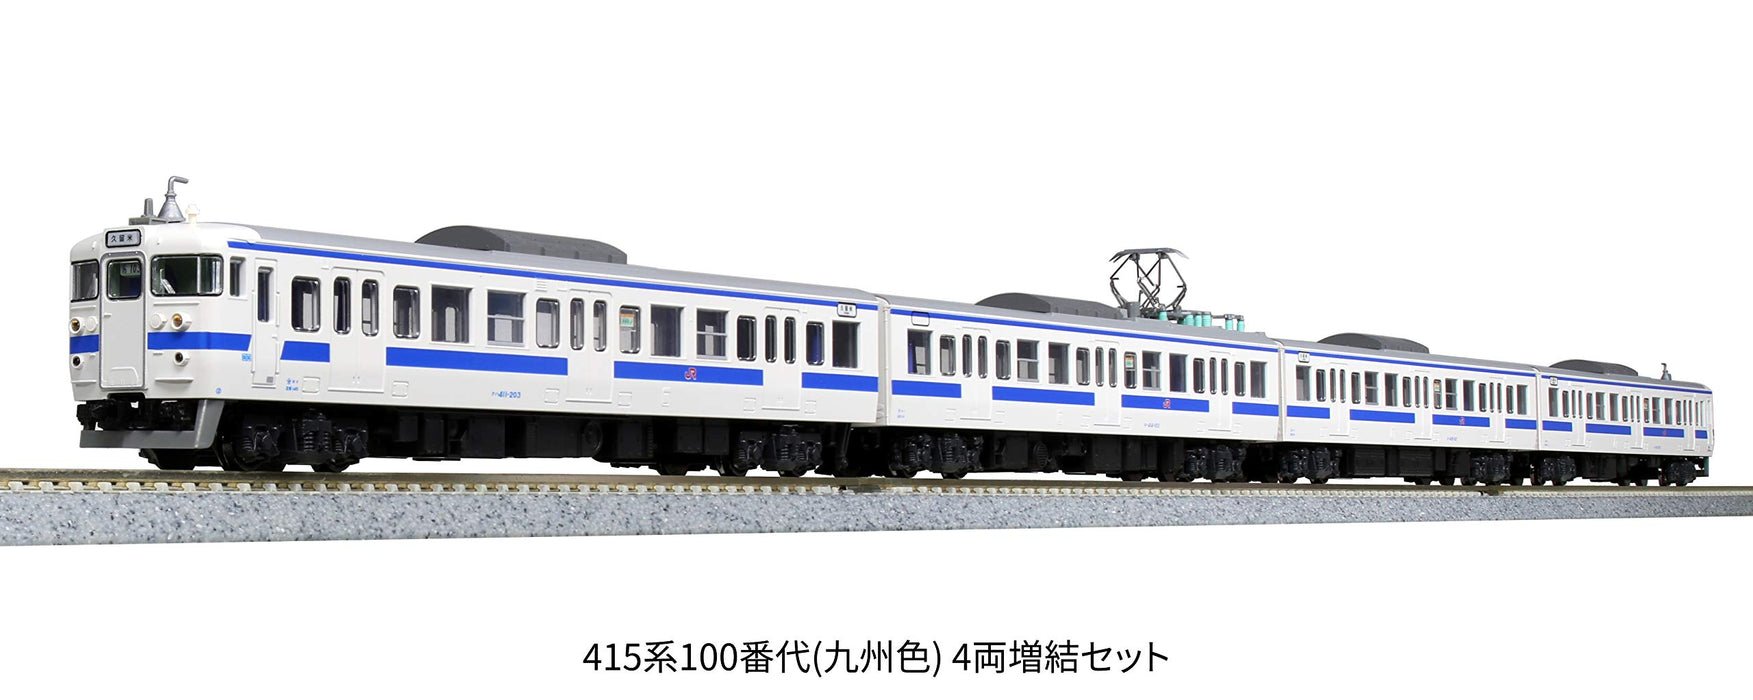 Kato Railway Model Train - N Gauge 415 Series 4-Car Add-On Set Kyushu Color